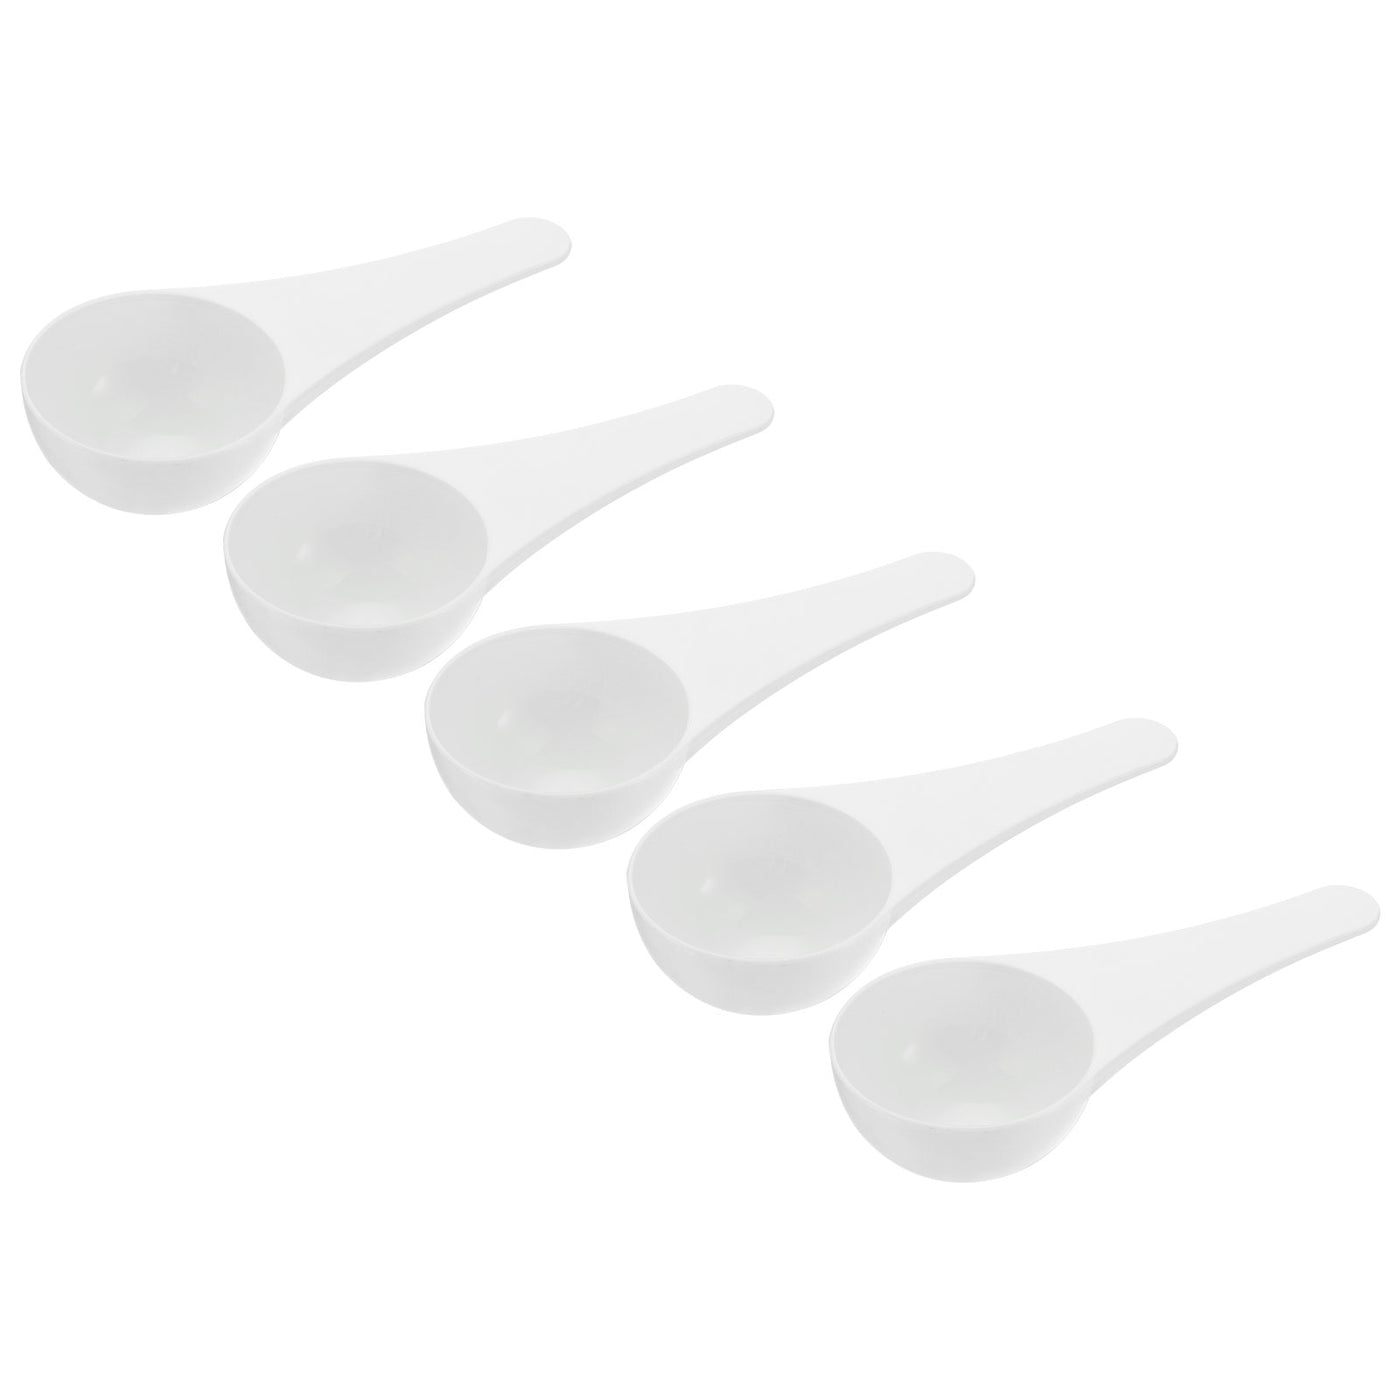 Harfington Micro Spoons 15 Gram Measuring Scoop Plastic Round Bottom Mini Spoon 30Pcs